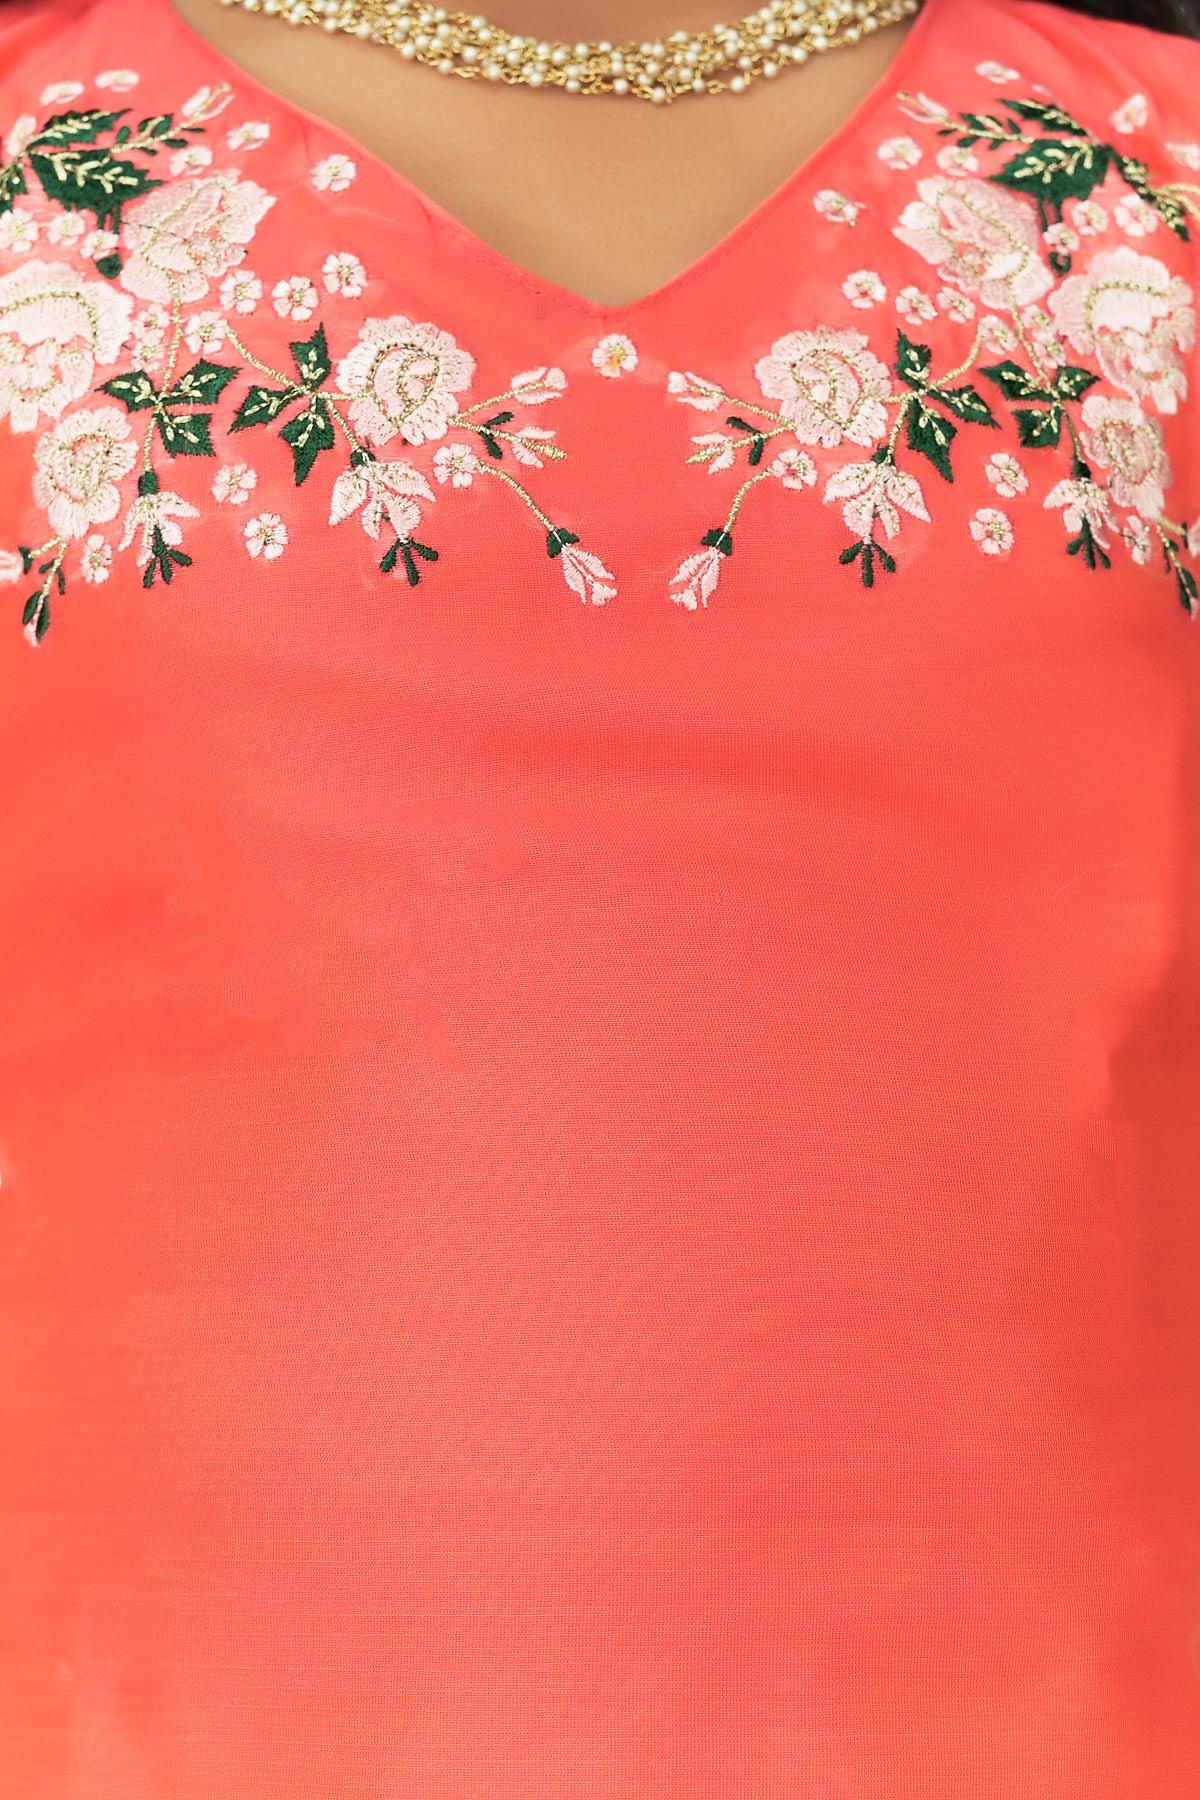 Botanical Floral Embroidered Top & Floral Digital Printed Skirt Set - Peach & Pale Pink